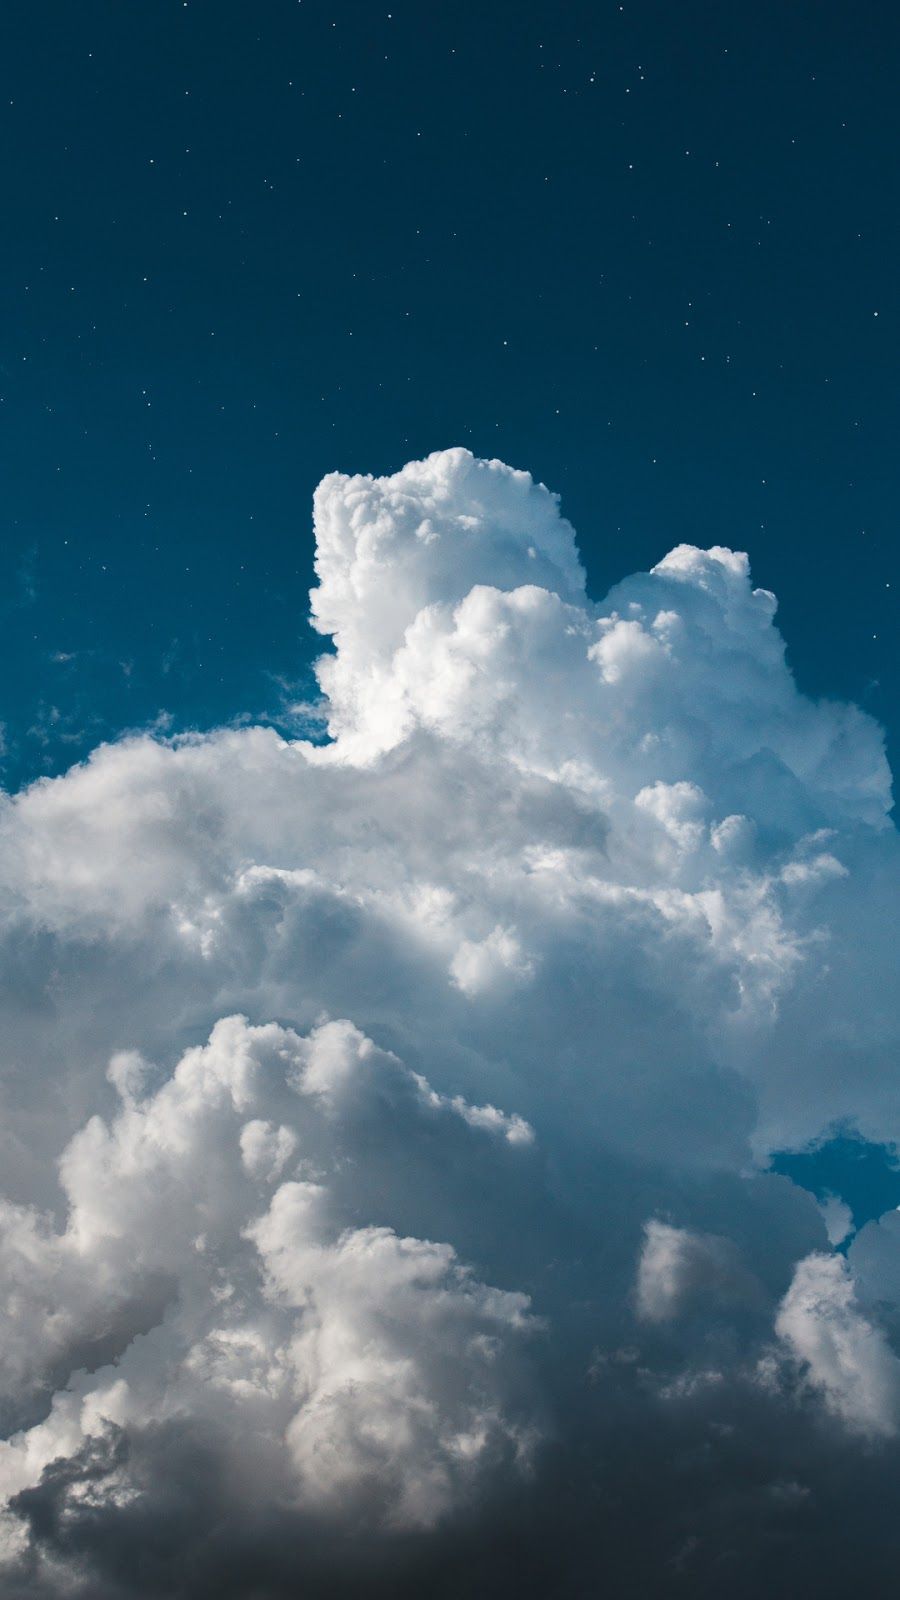 Fluffy clouds. Clouds wallpaper iphone, Cloud wallpaper